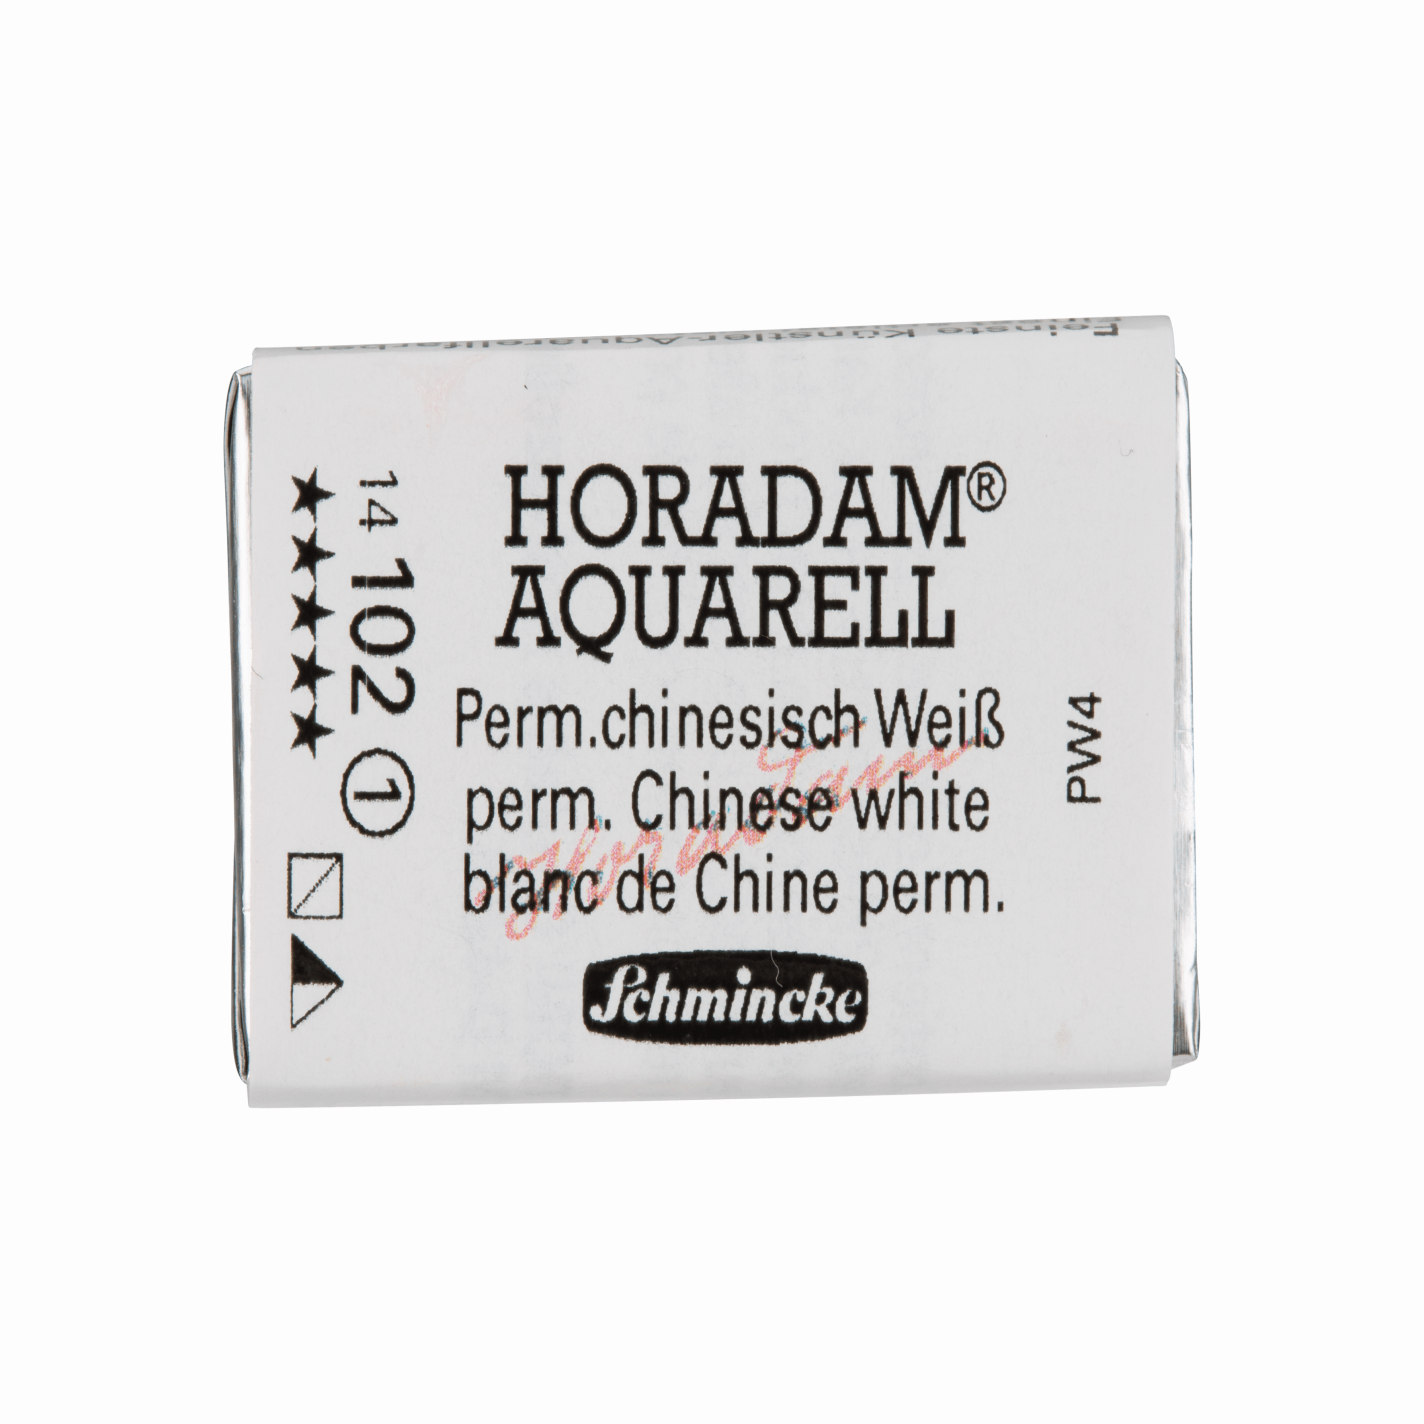 Schmincke Horadam Aquarell pans 1/1 pan permanent Chinese white